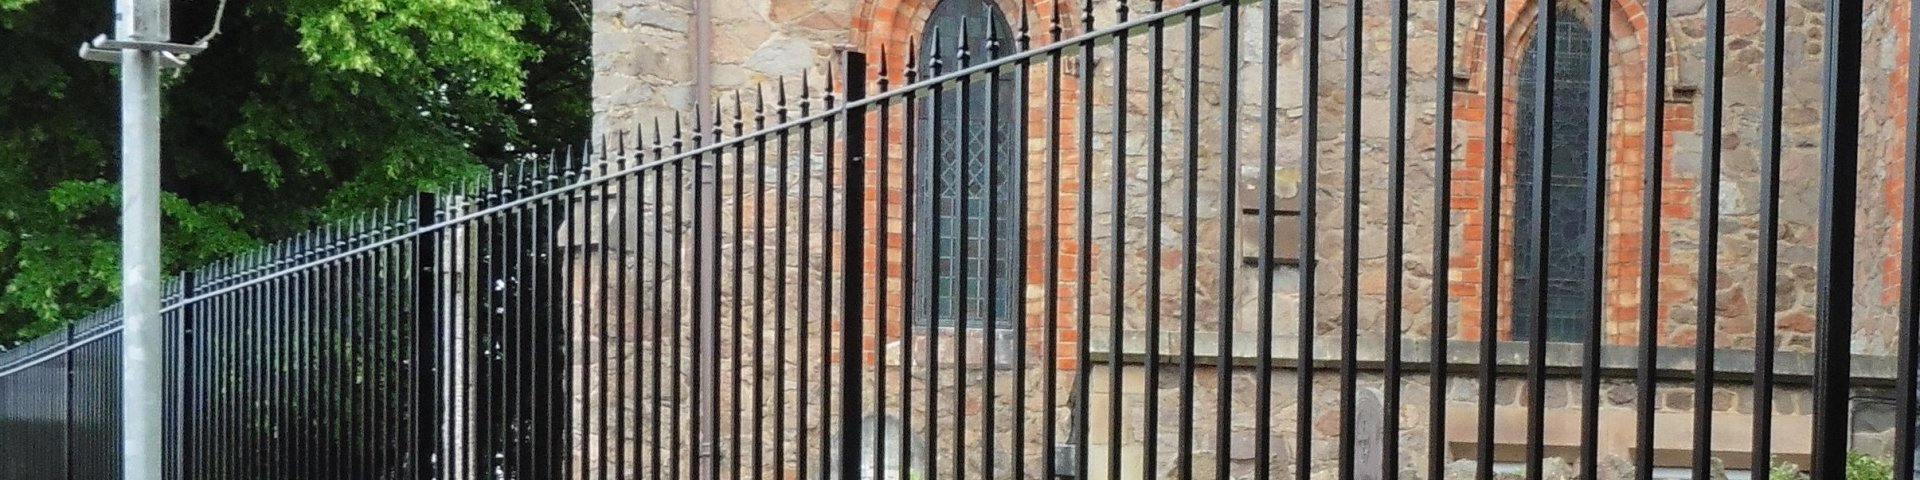 Churchyard railing